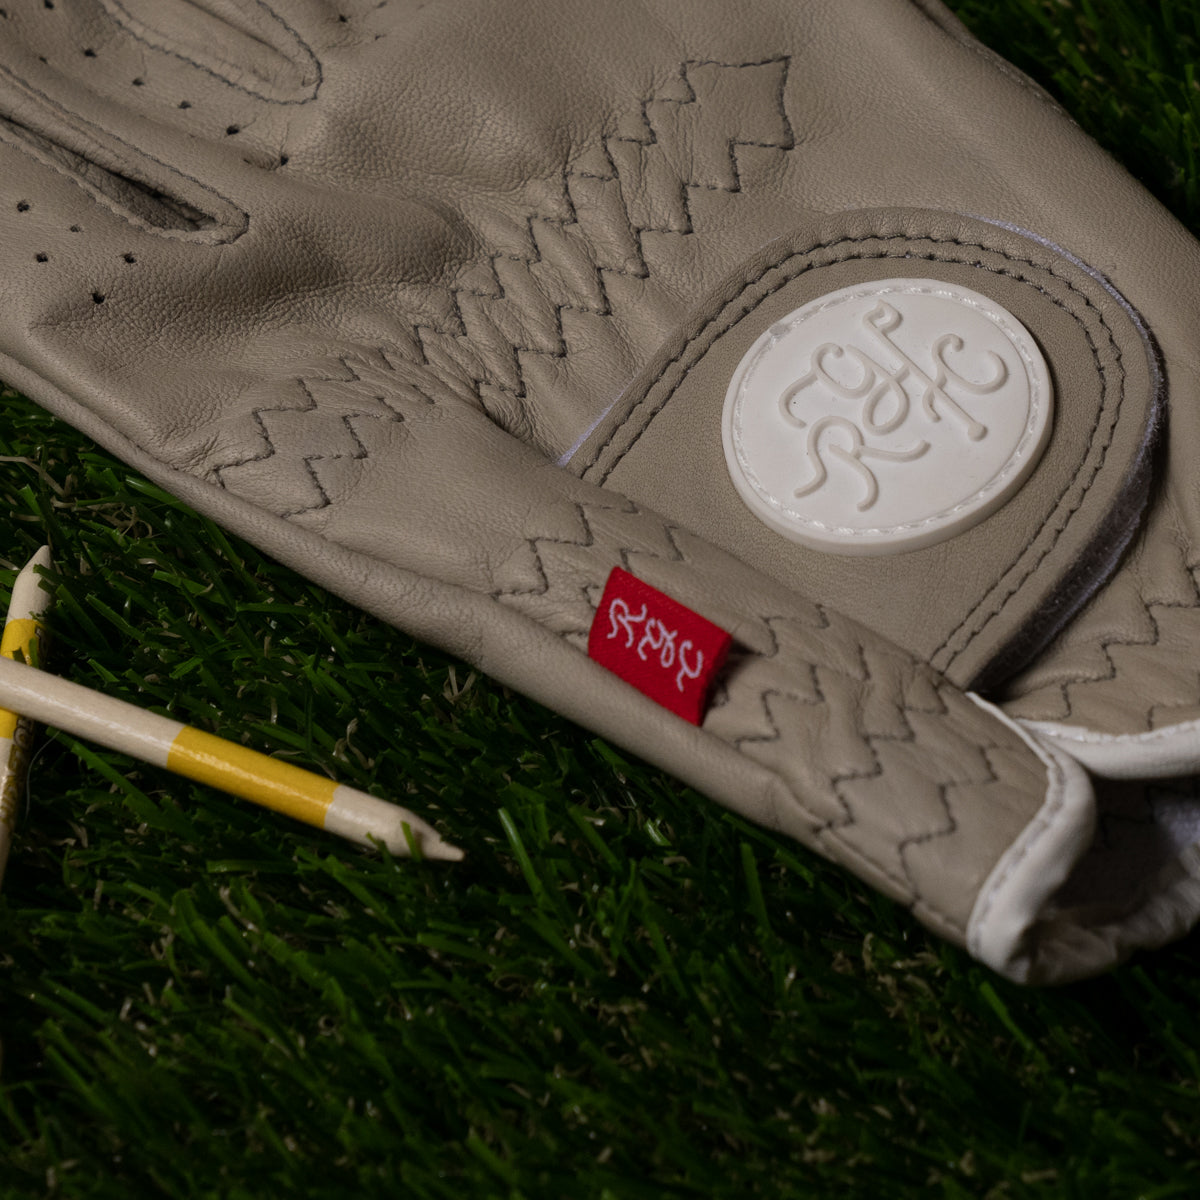 RGC CL-2 Golf Glove (Grey)